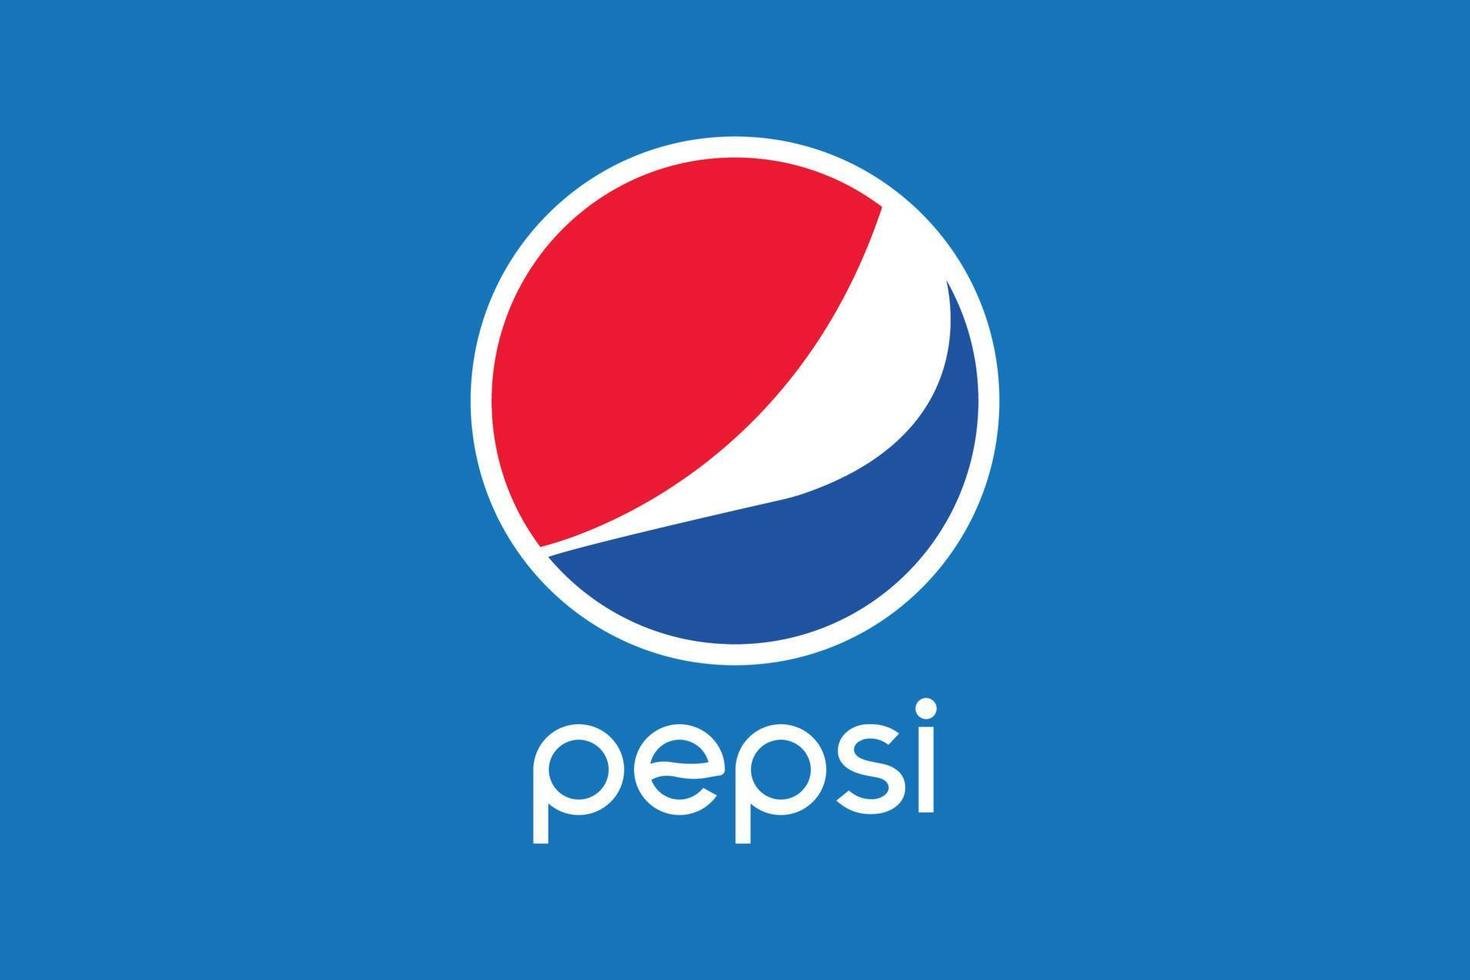 pepsi-popular-drink-brand-logo-vinnytsia-ukraine-may-16-202-free-vector.jpeg